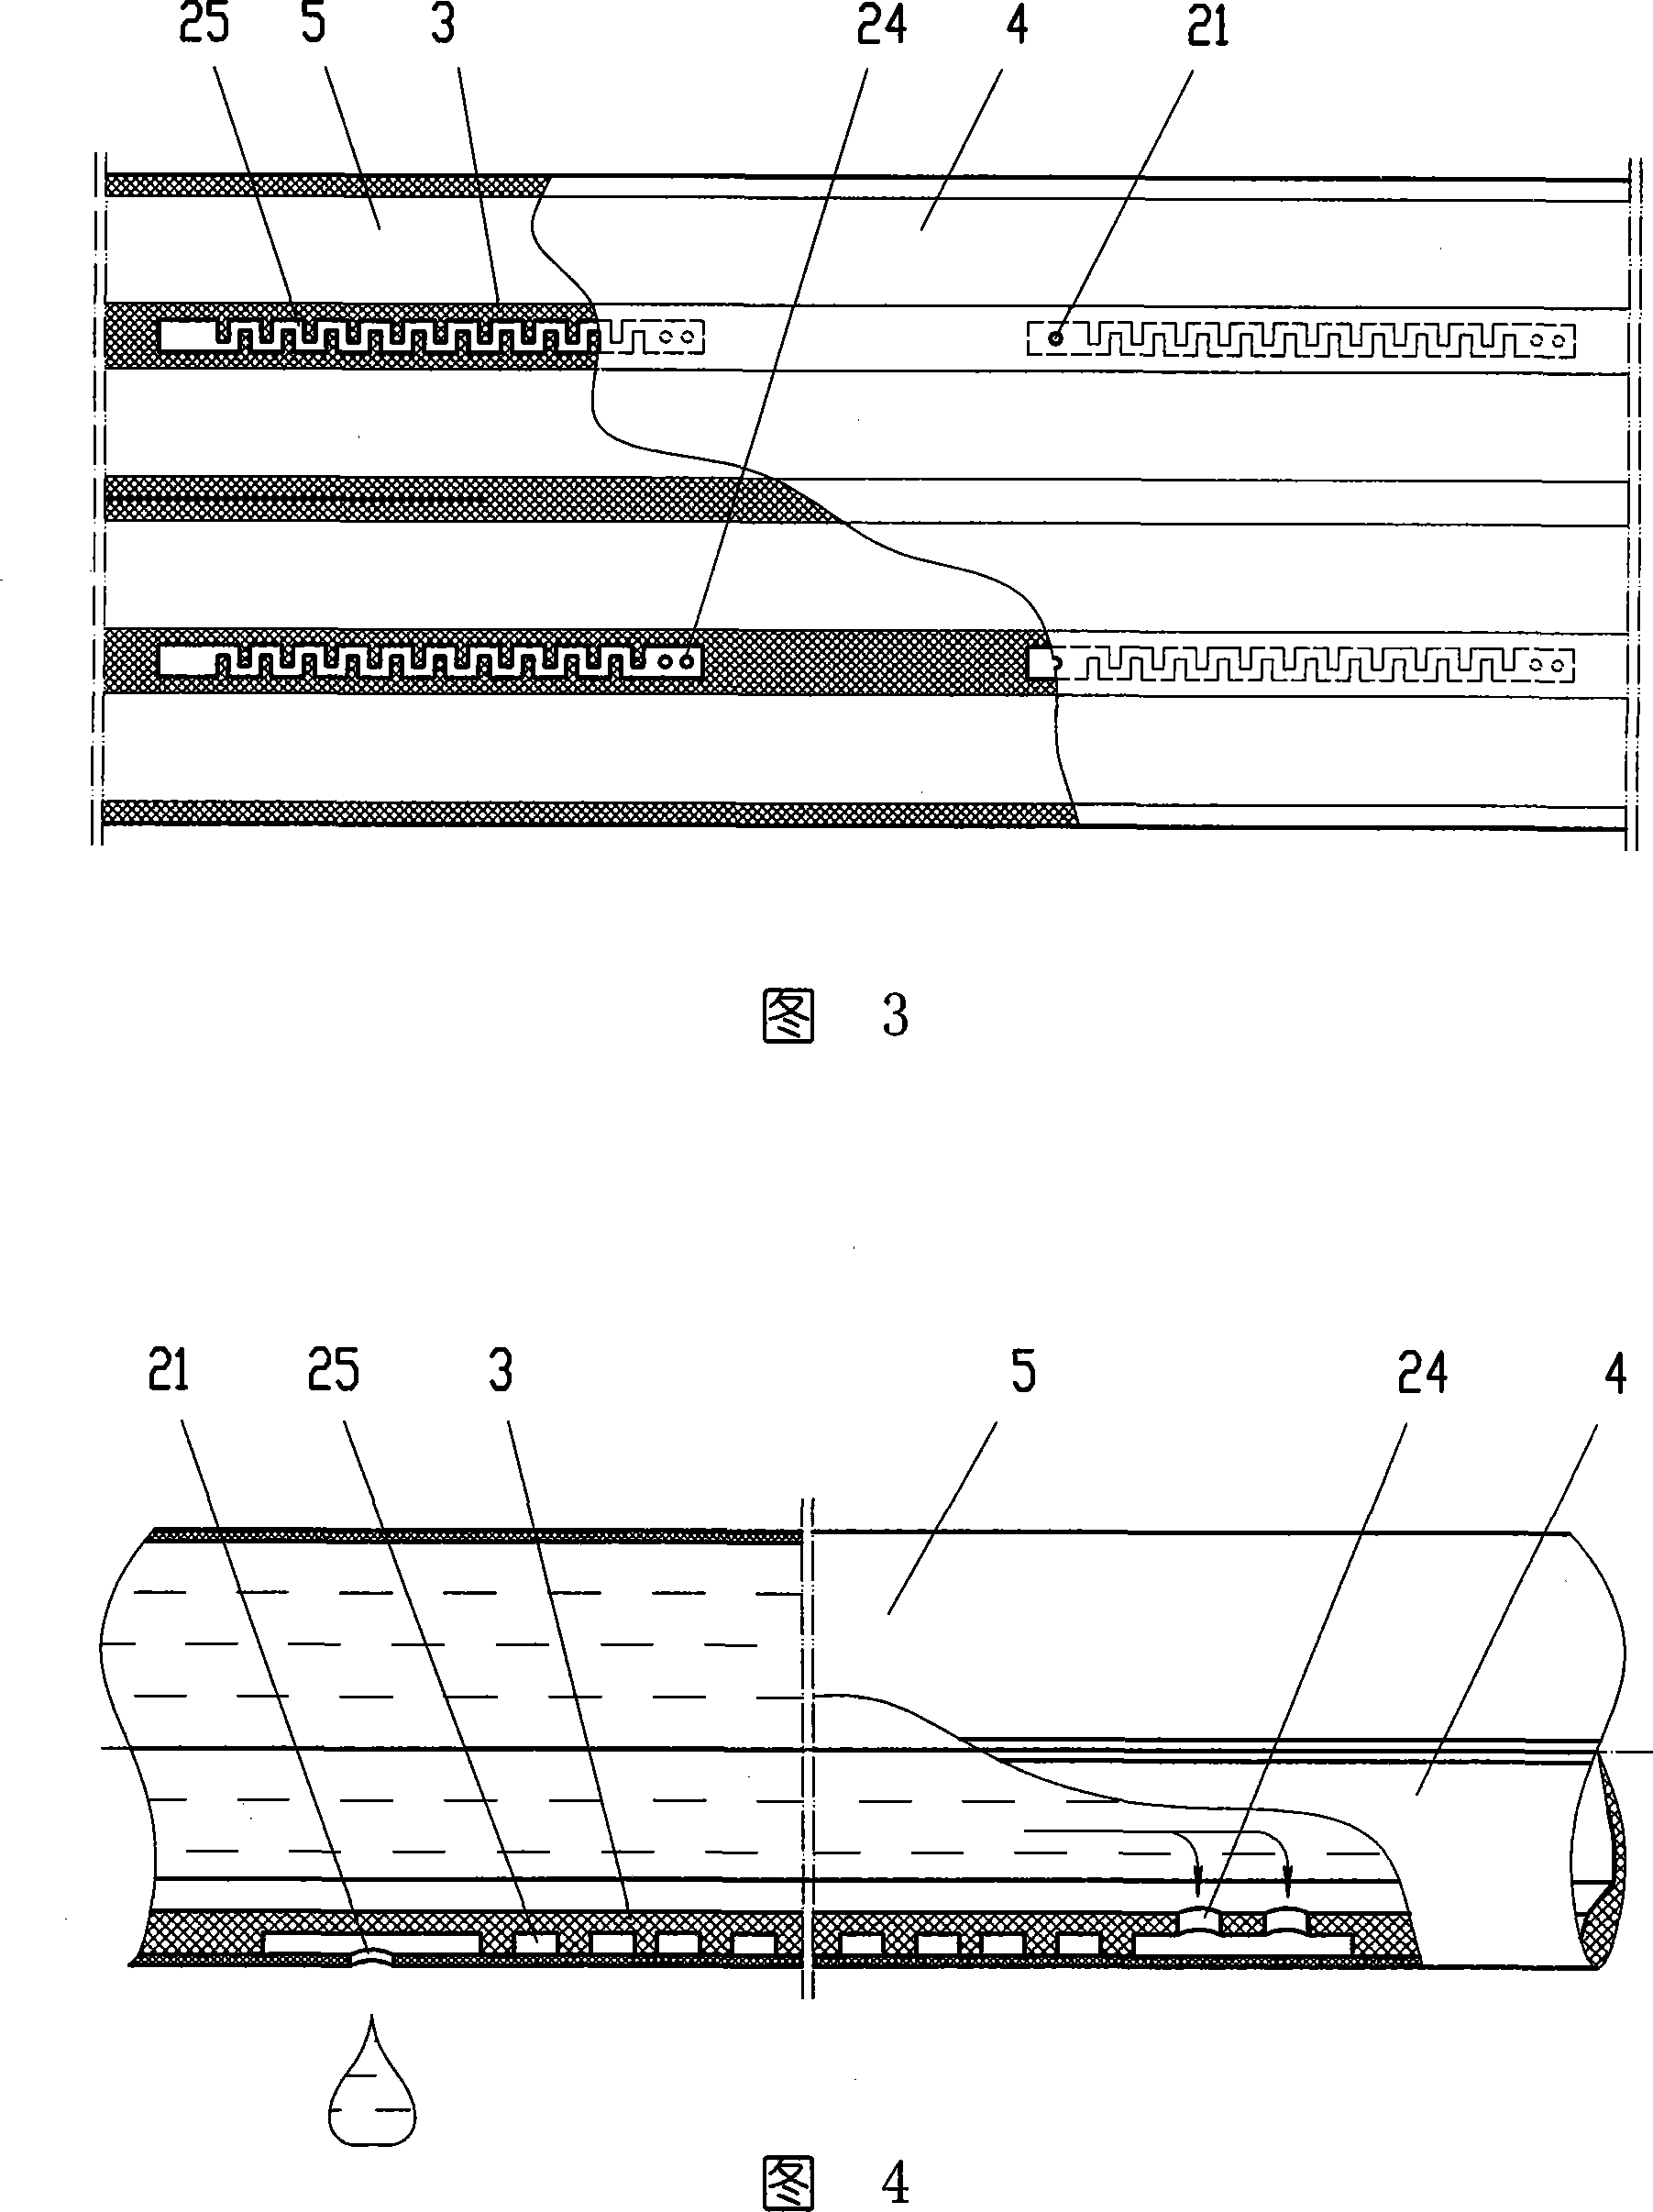 Paster type maze flow passage drip irrigation belt and production process